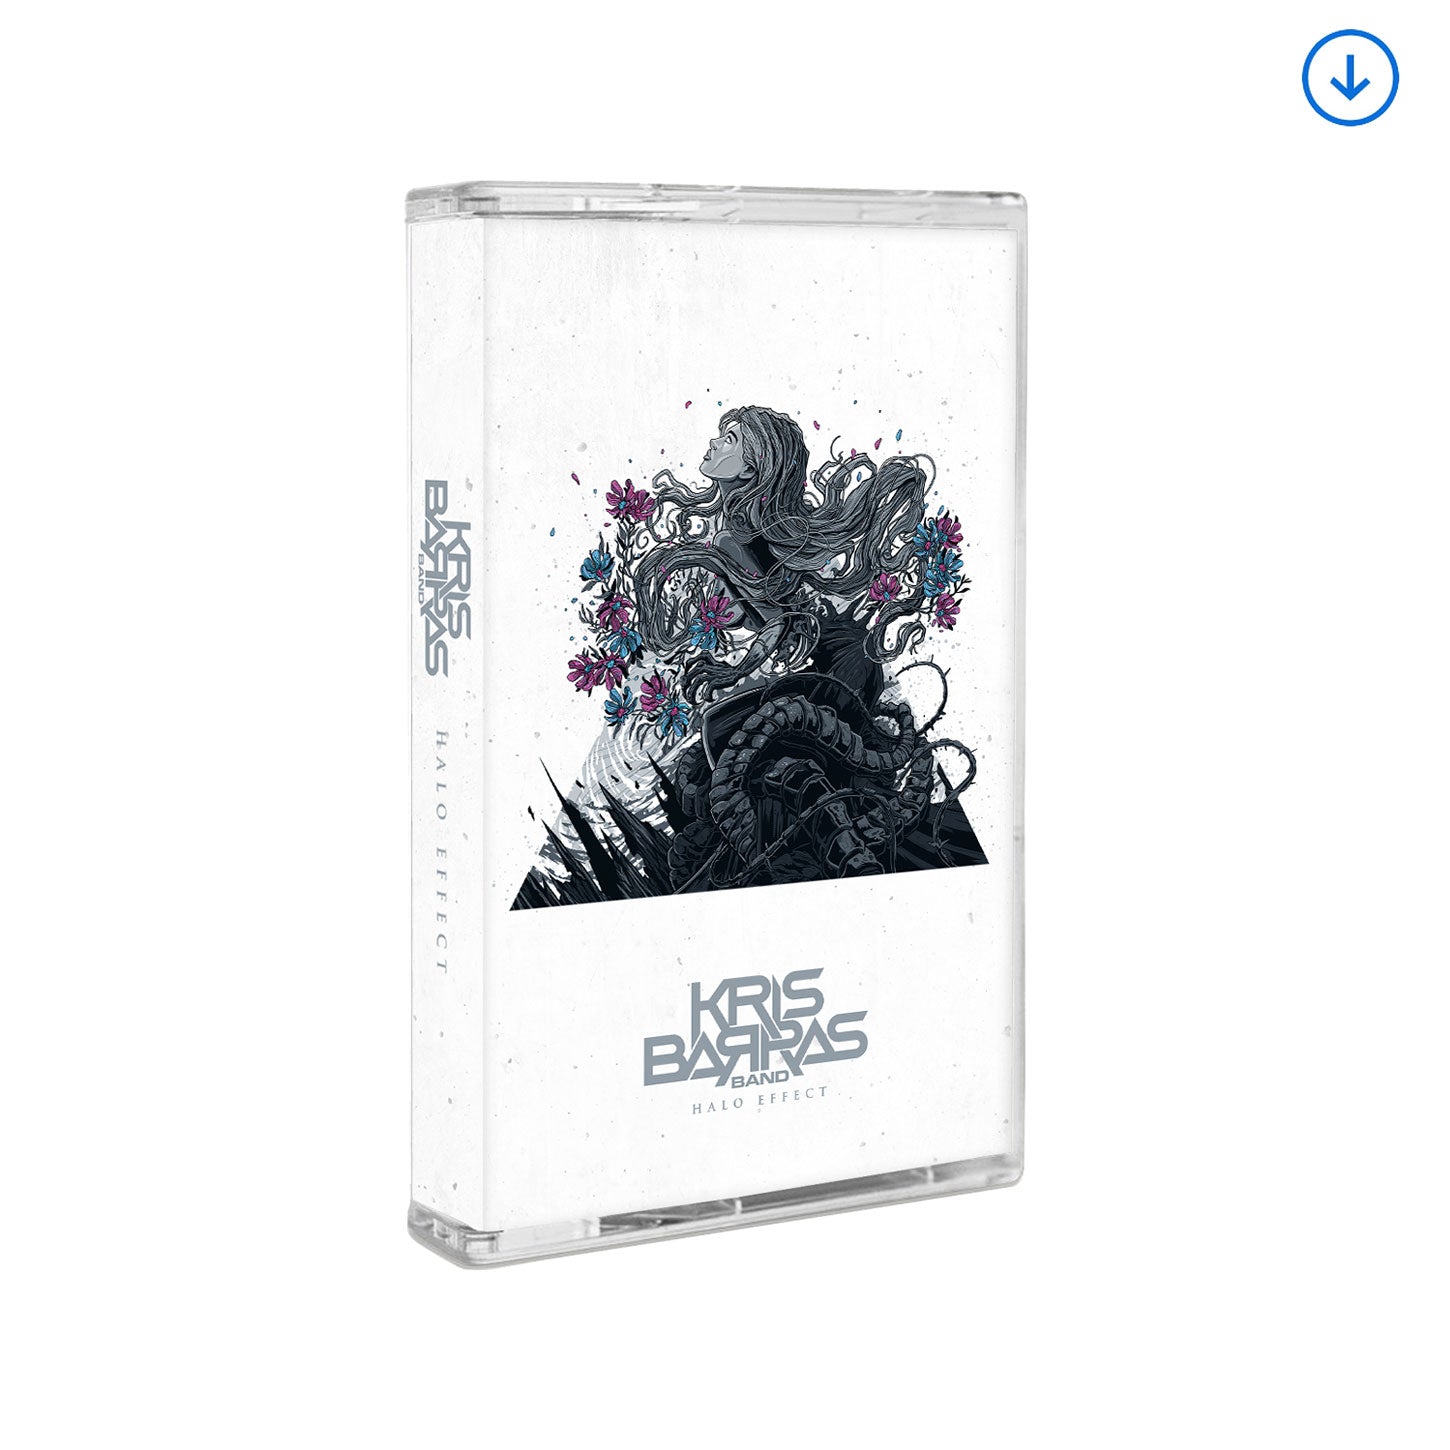 Kris Barras Band "Halo Effect" Cassette Tape + Download